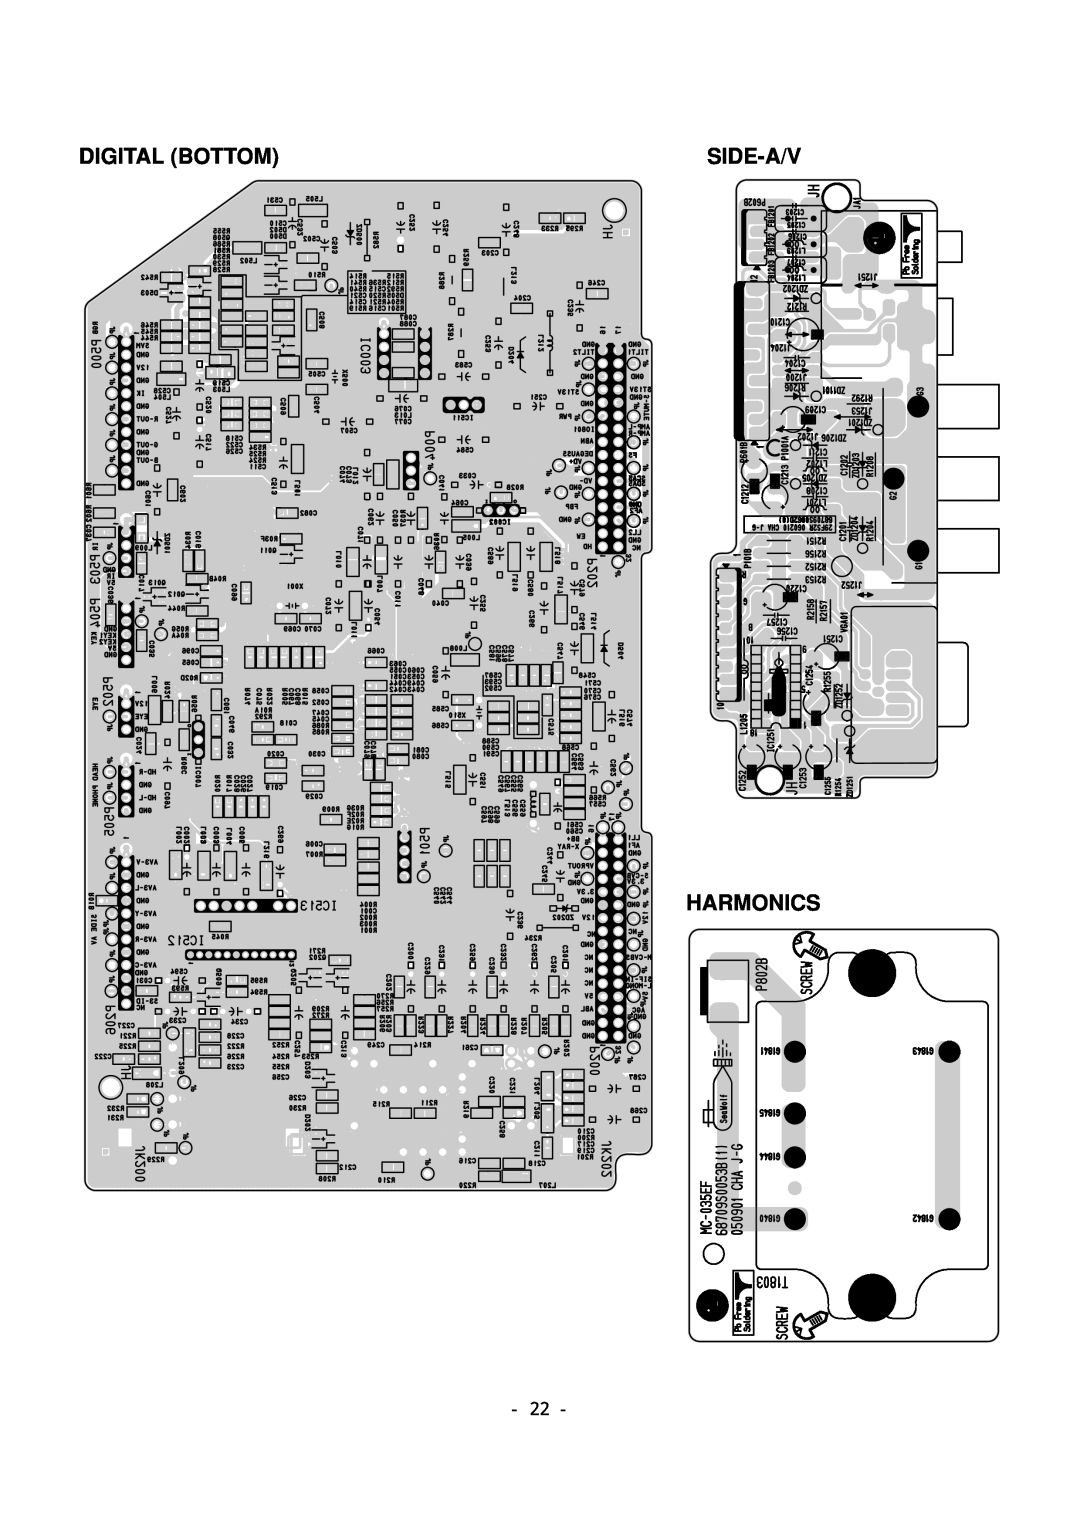 LG Electronics 29FS2AMB/ANX-ZE service manual Digital Bottom, Side-A/V, Harmonics 